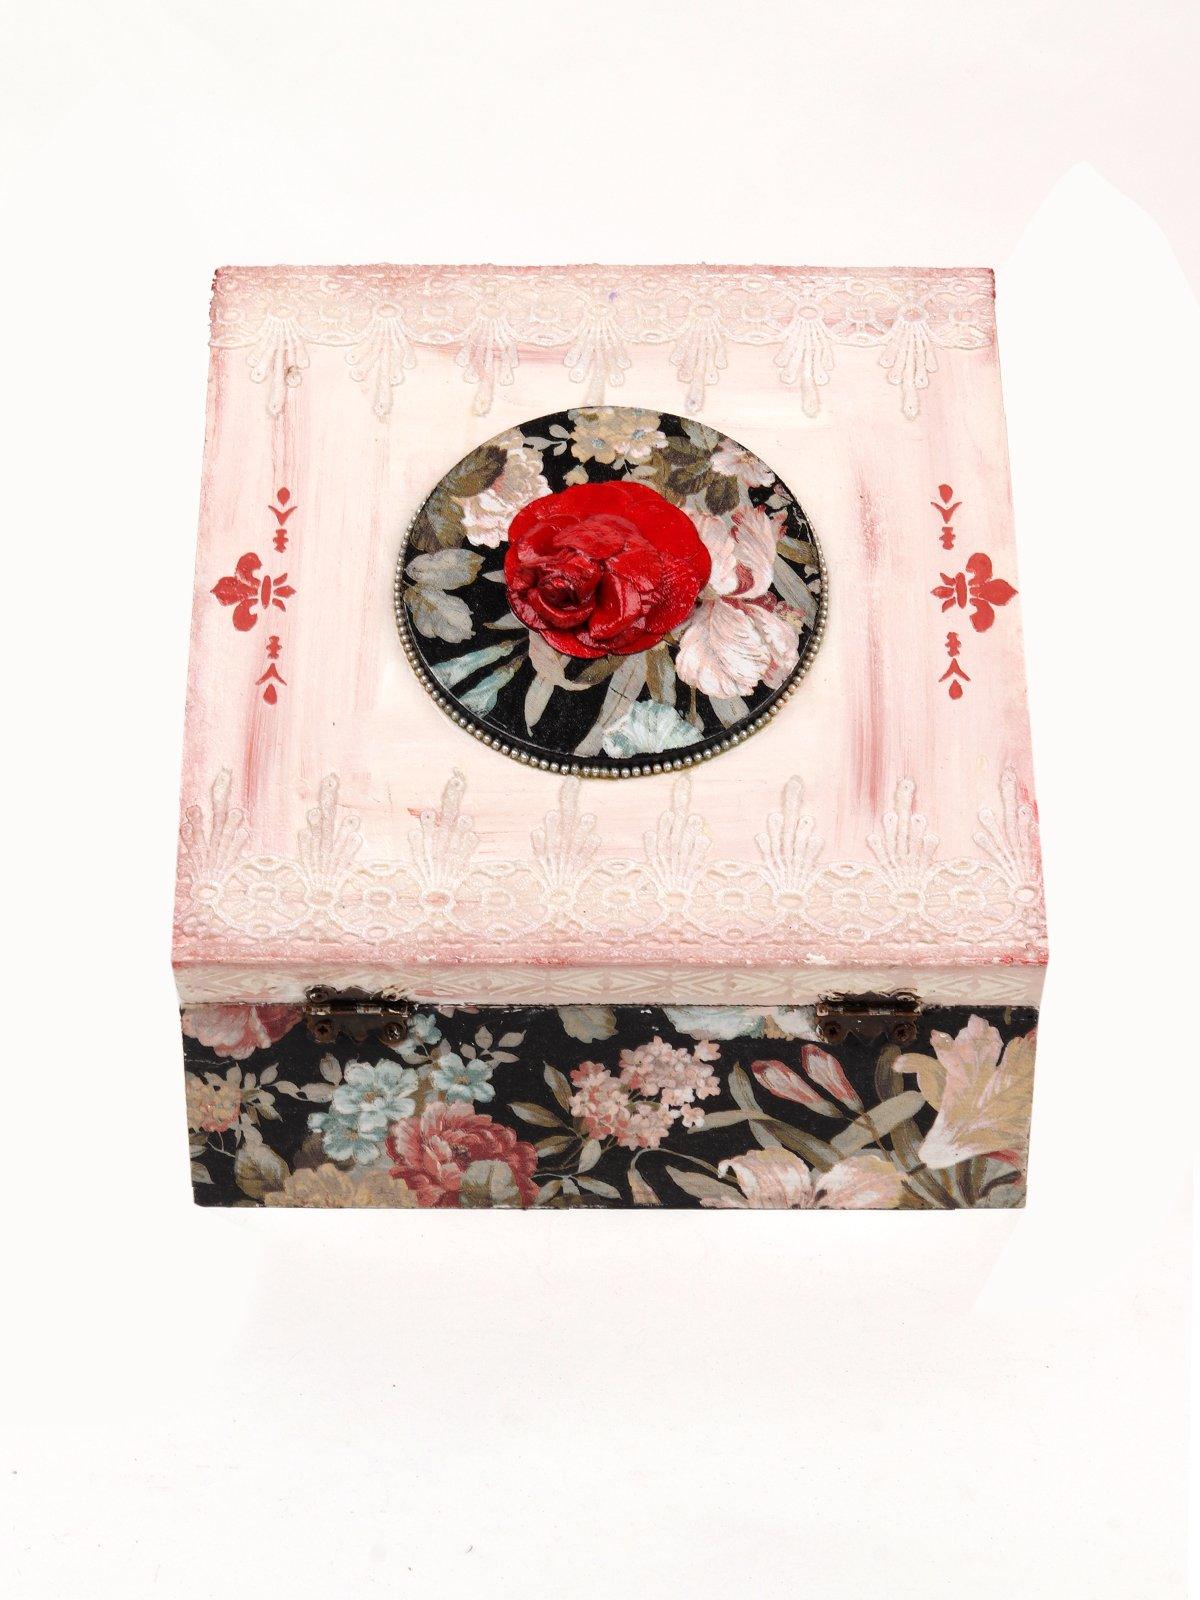 Handcrafted Bone Inlay Floral Design Multipurpose Box - Odette